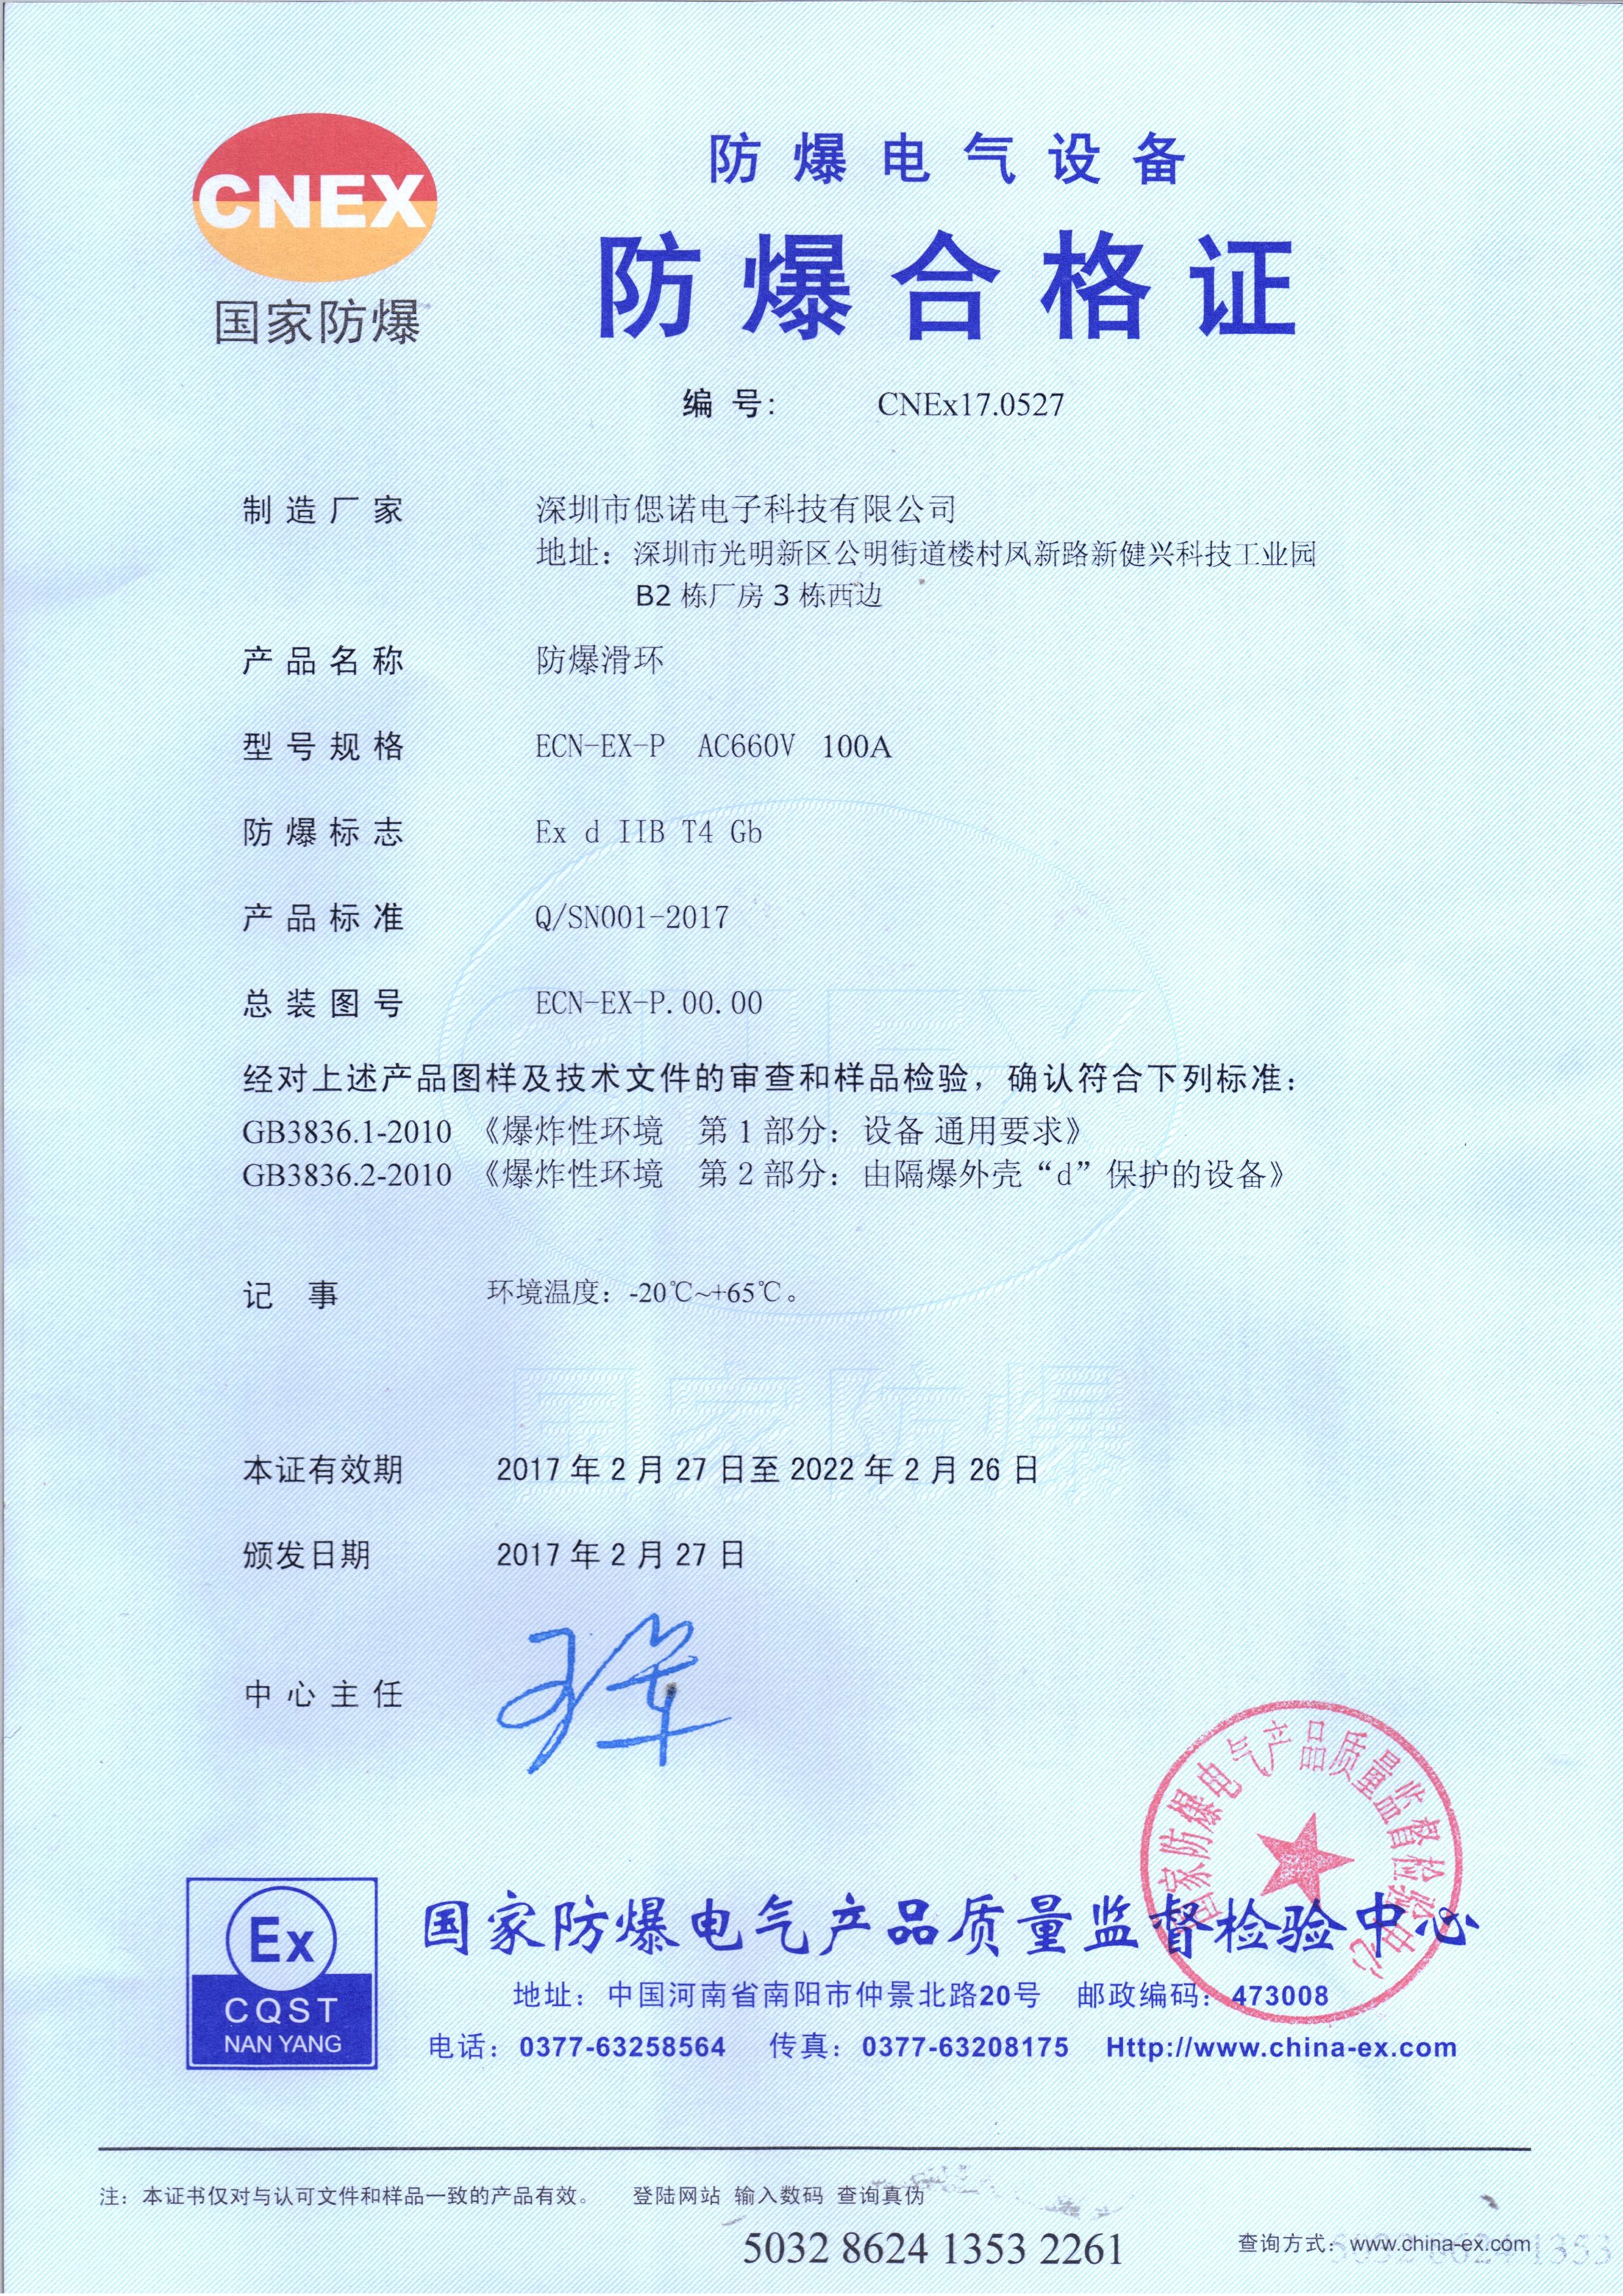 LA CHINE CENO Electronics Technology Co.,Ltd Certifications